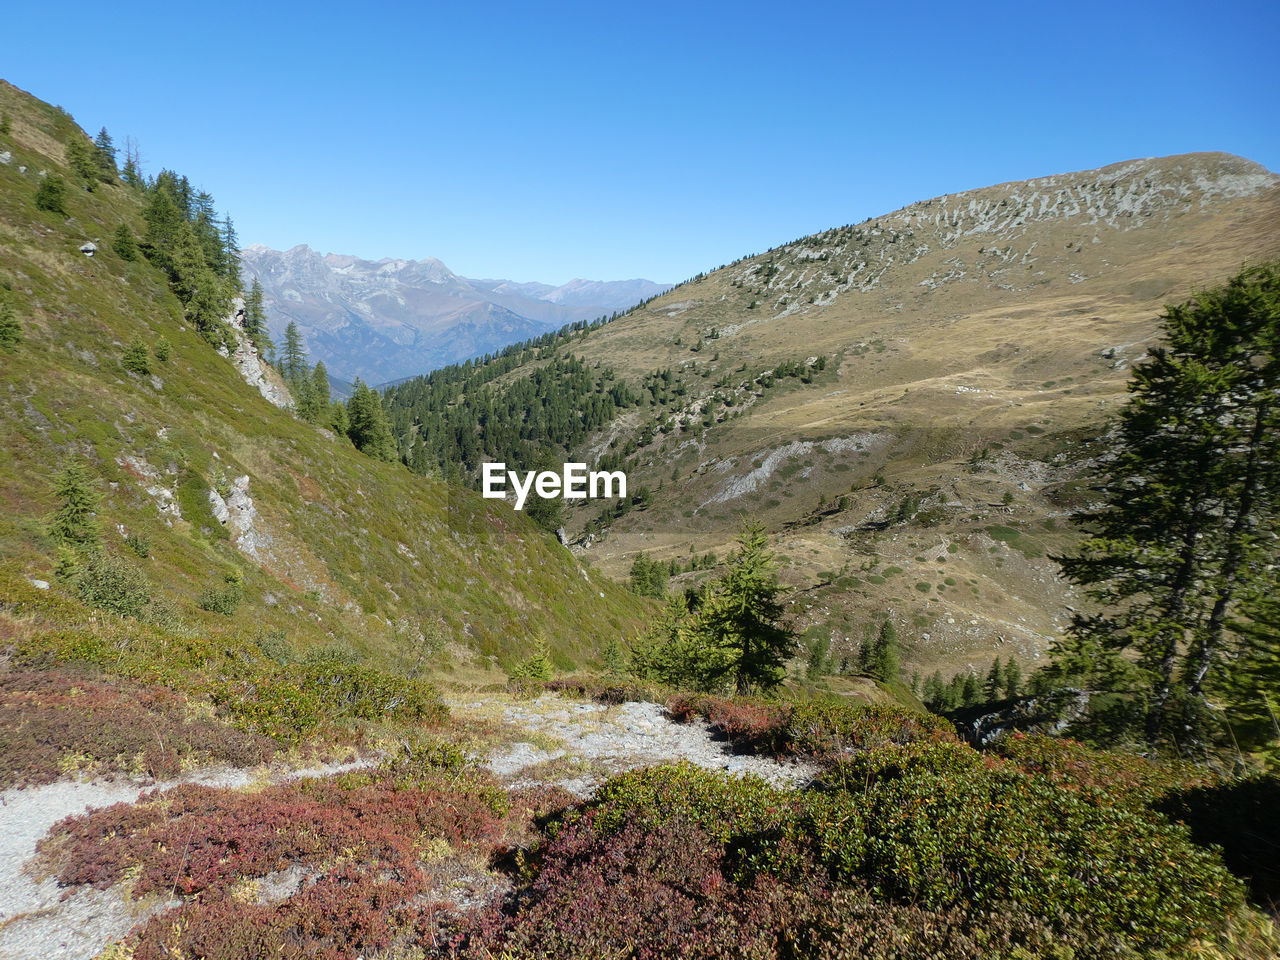 Scenic alpine landscape near colle sibolet